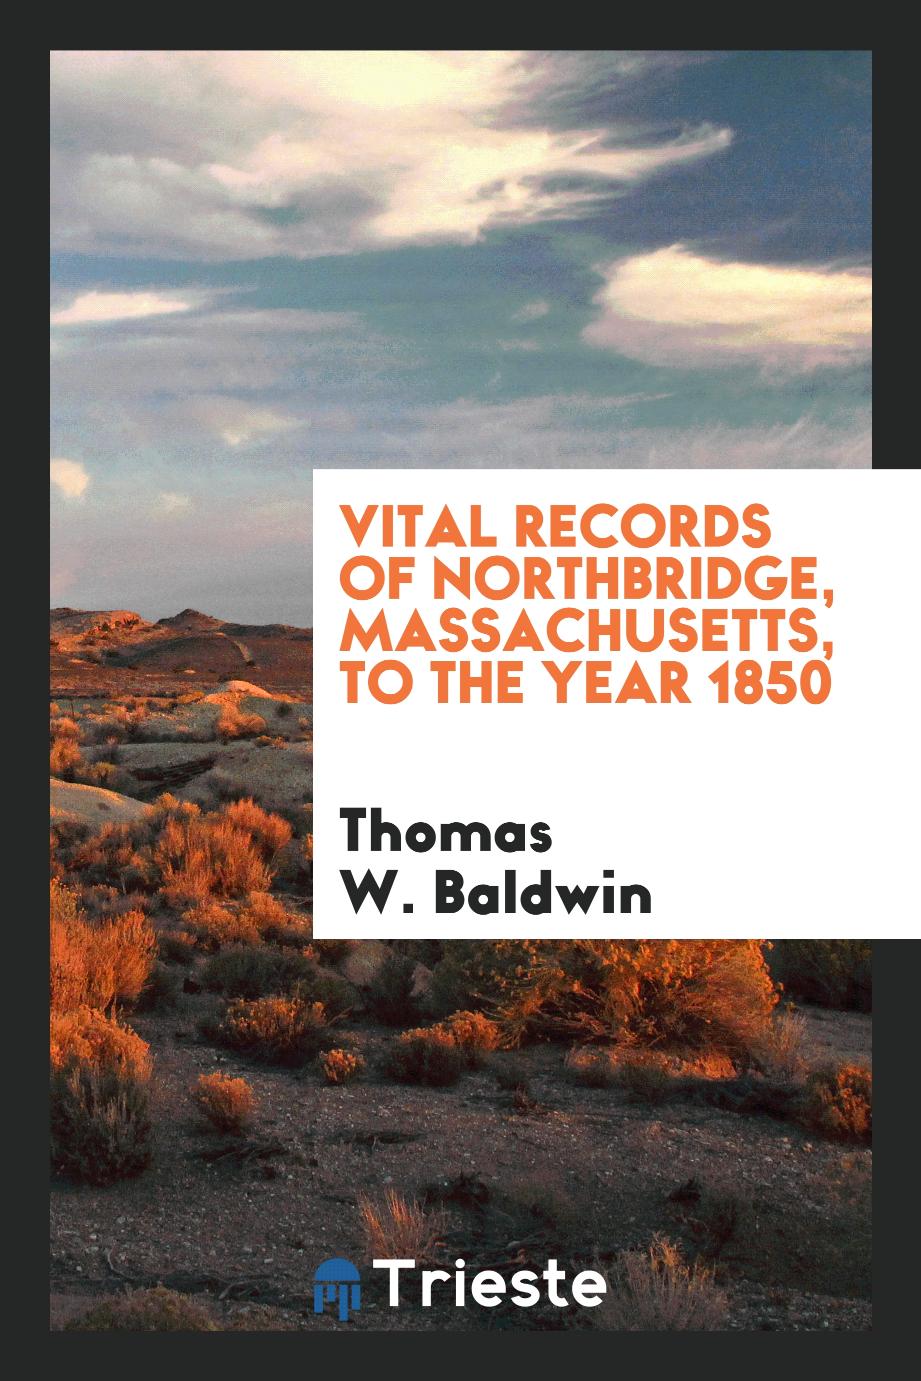 Vital records of Northbridge, Massachusetts, to the year 1850